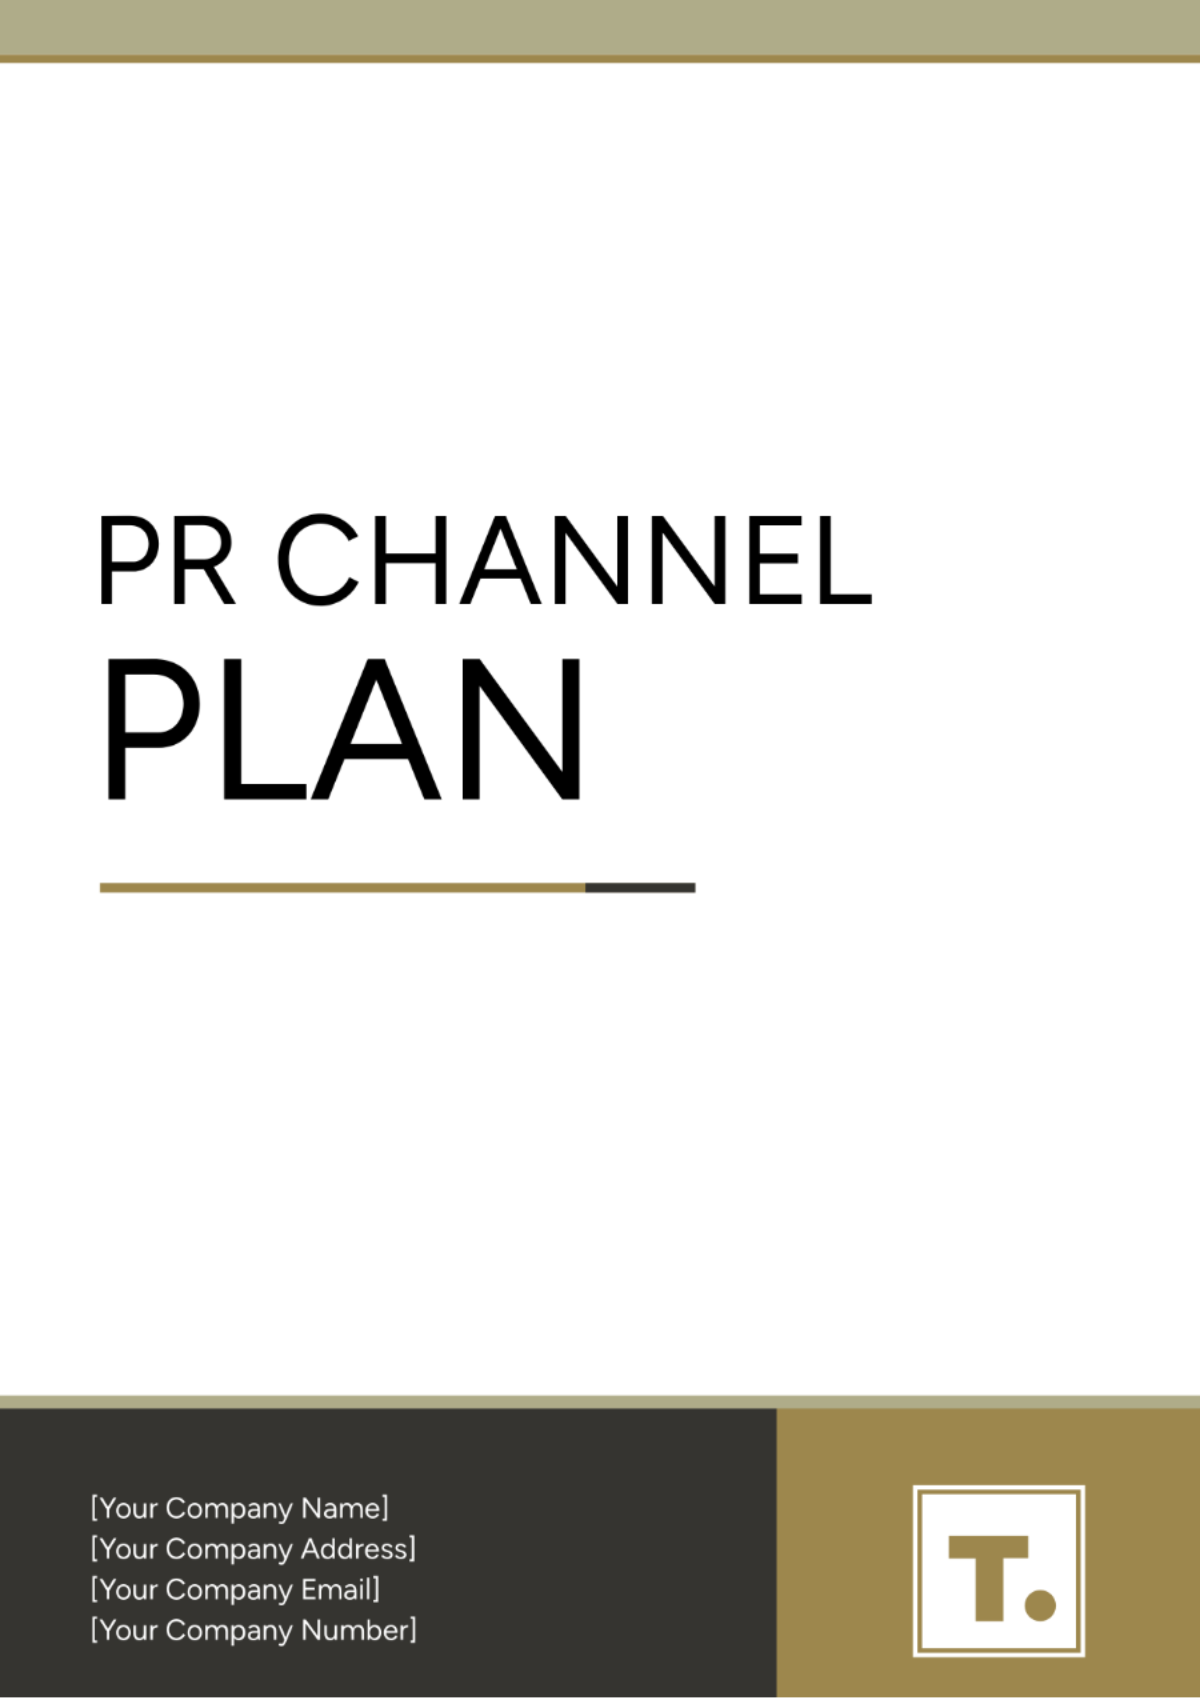 PR Channel Plan Template